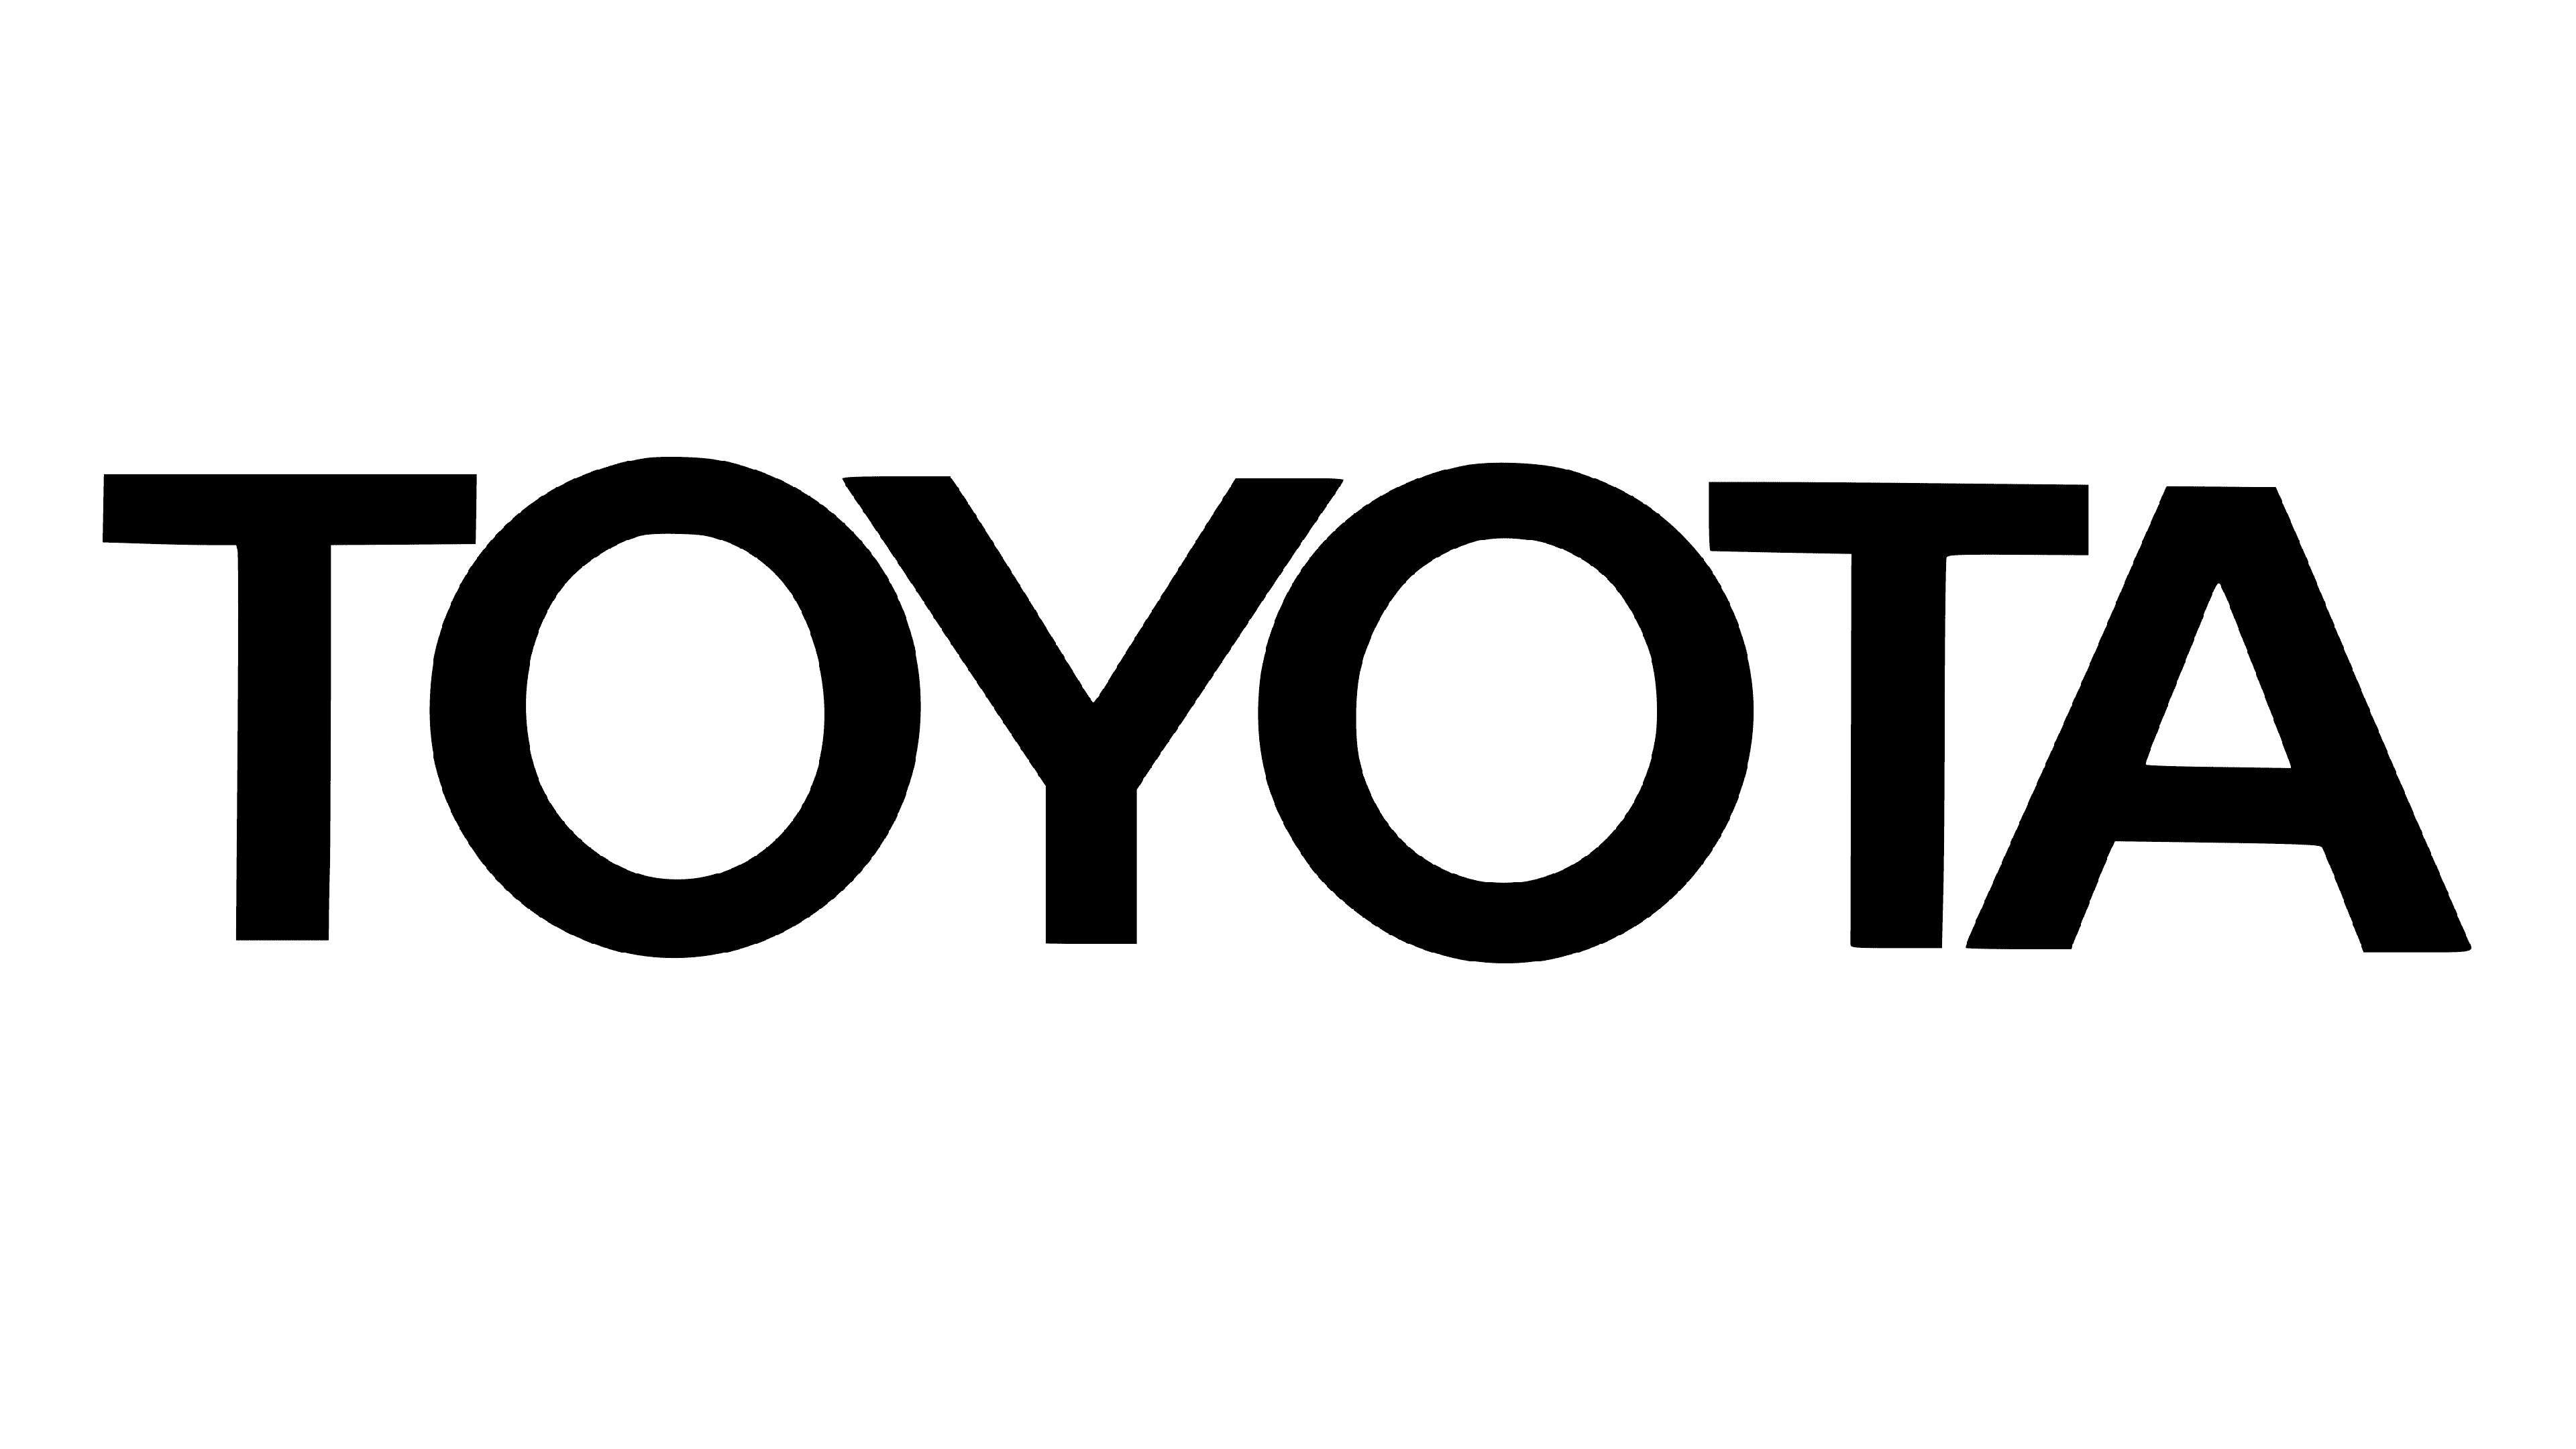 toyota logo history design